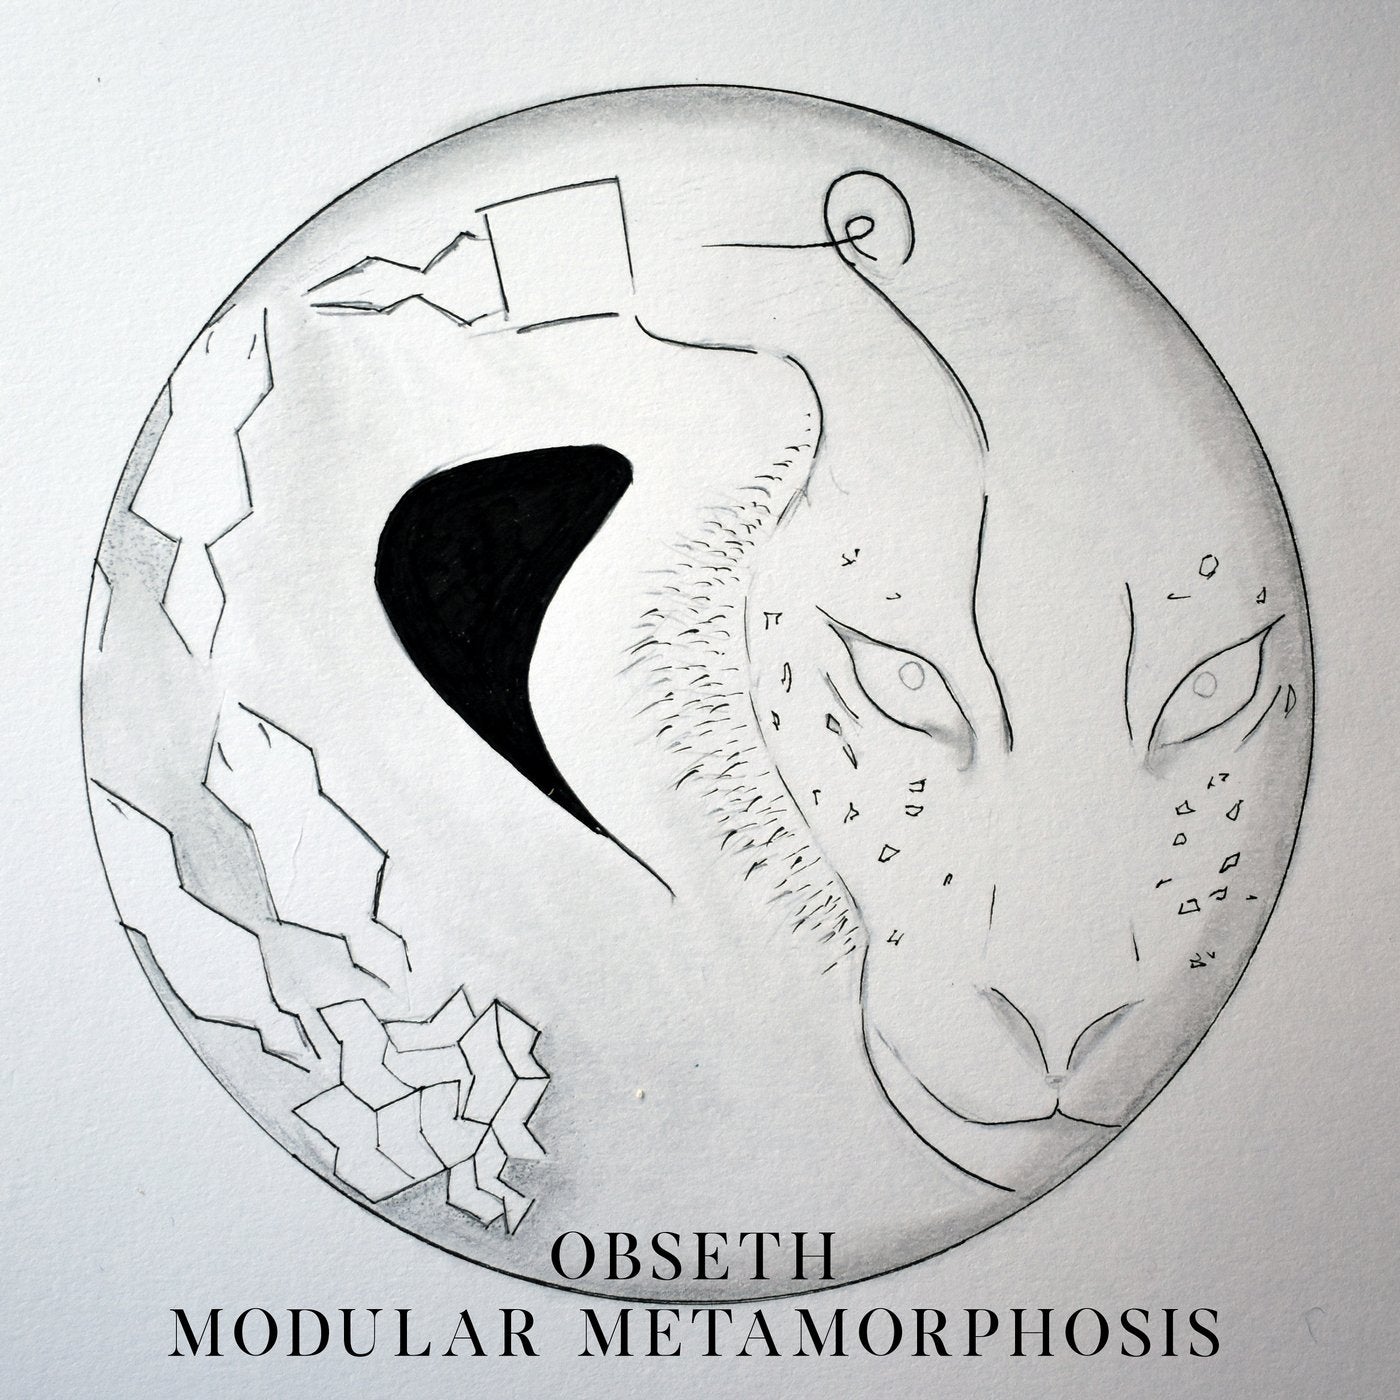 Modular Metamorphosis